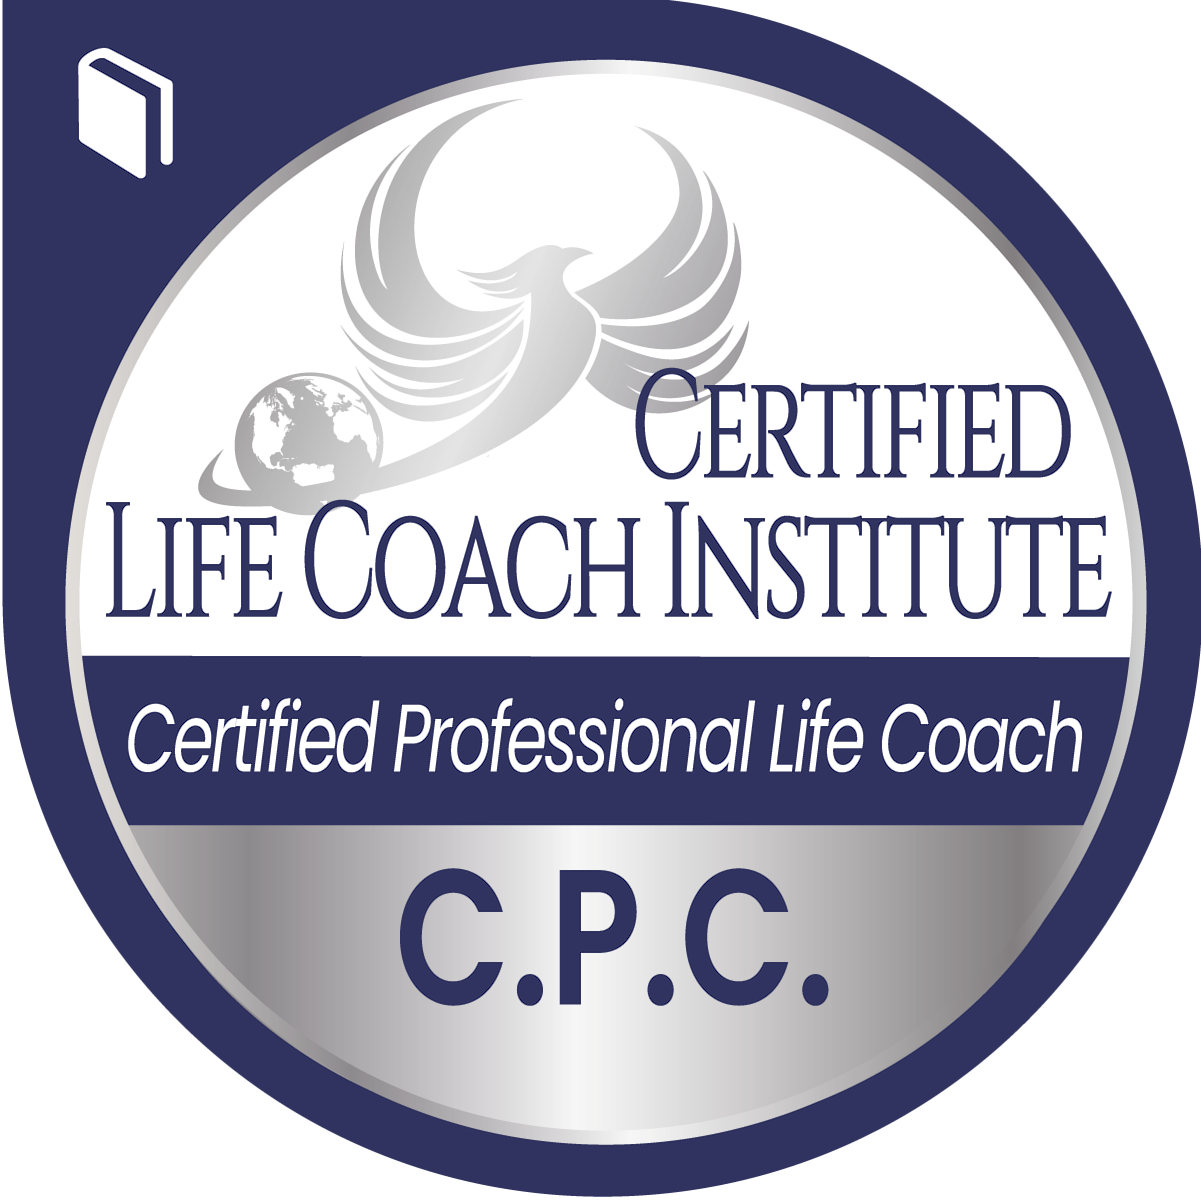 Certified Professional Life Coach Institute